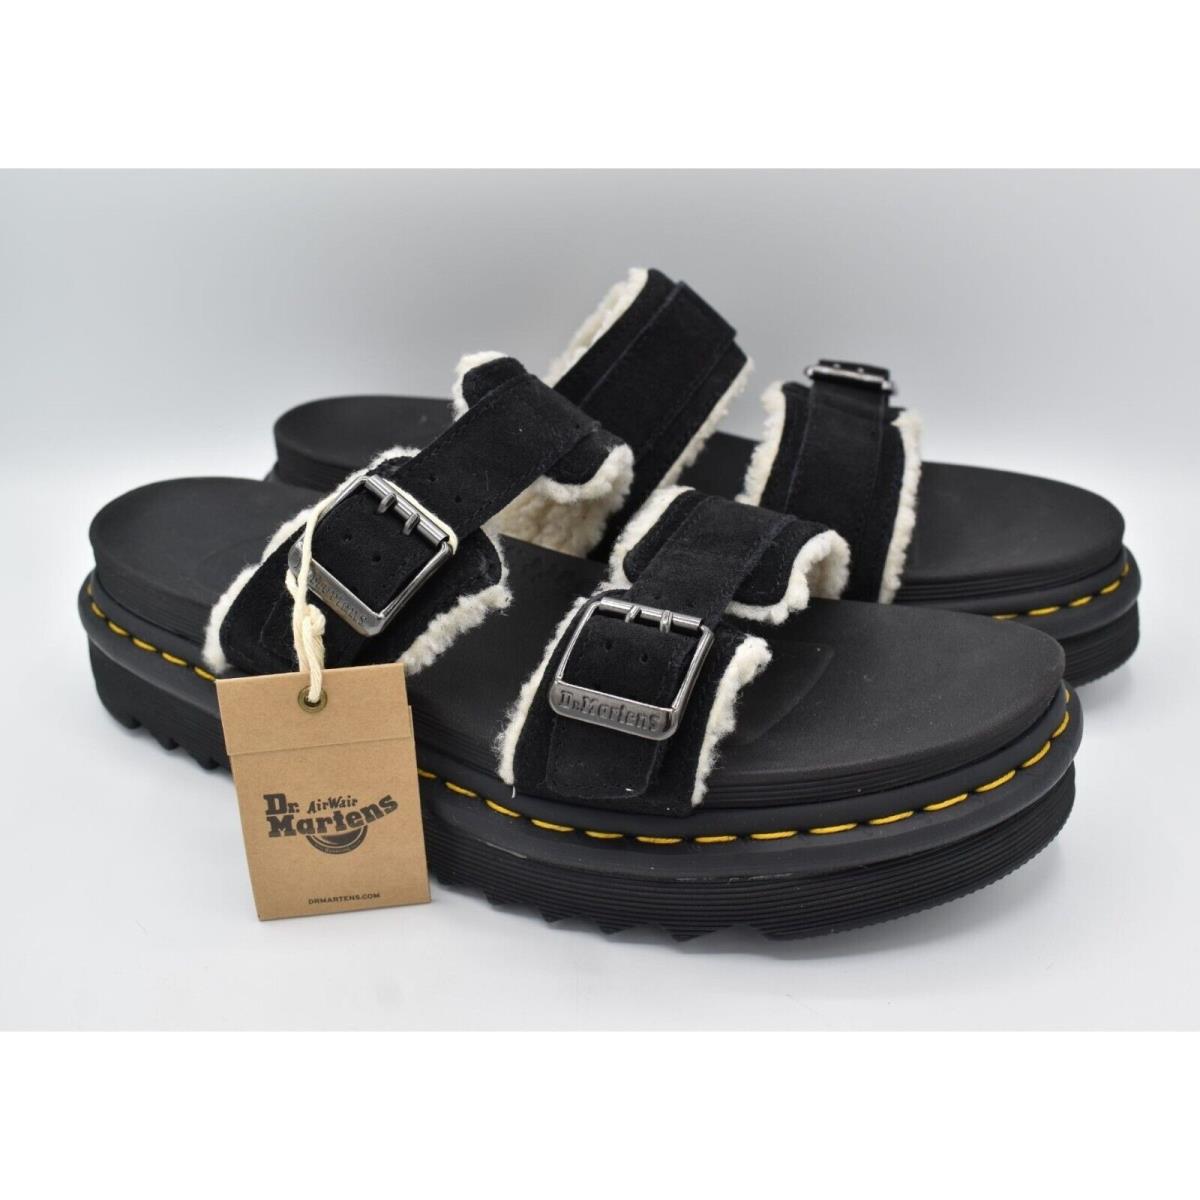 Dr Martens Mens Size 12 Myles Black Suede Buckle Slide Sandals Shoes